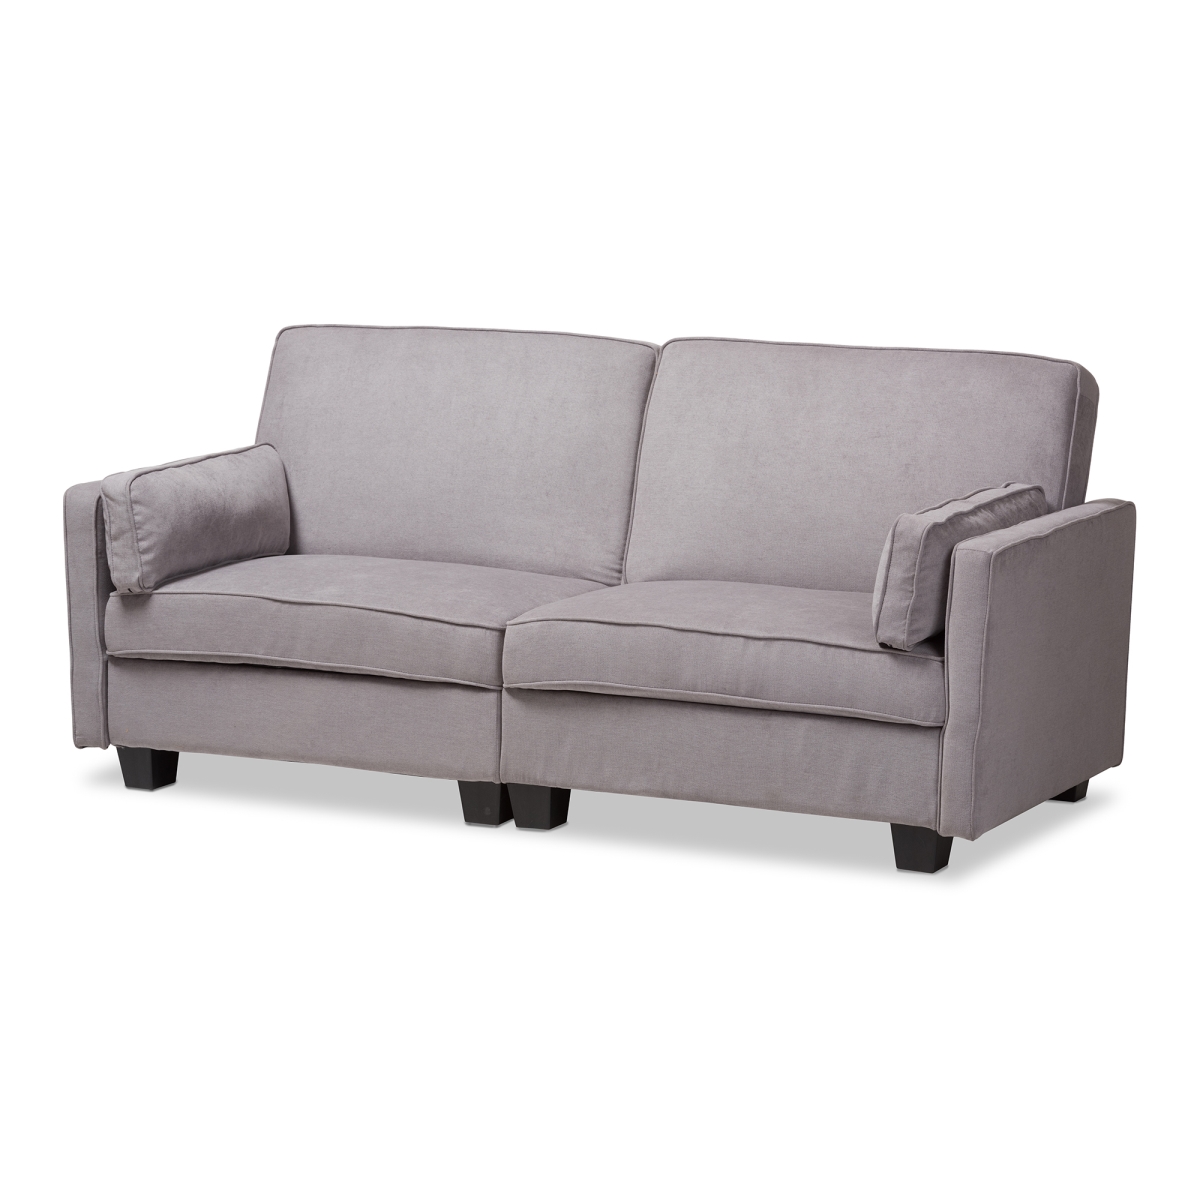 R9003-light Gray-sf Felicity Modern & Contemporary Light Gray Fabric Upholstered Sleeper Sofa